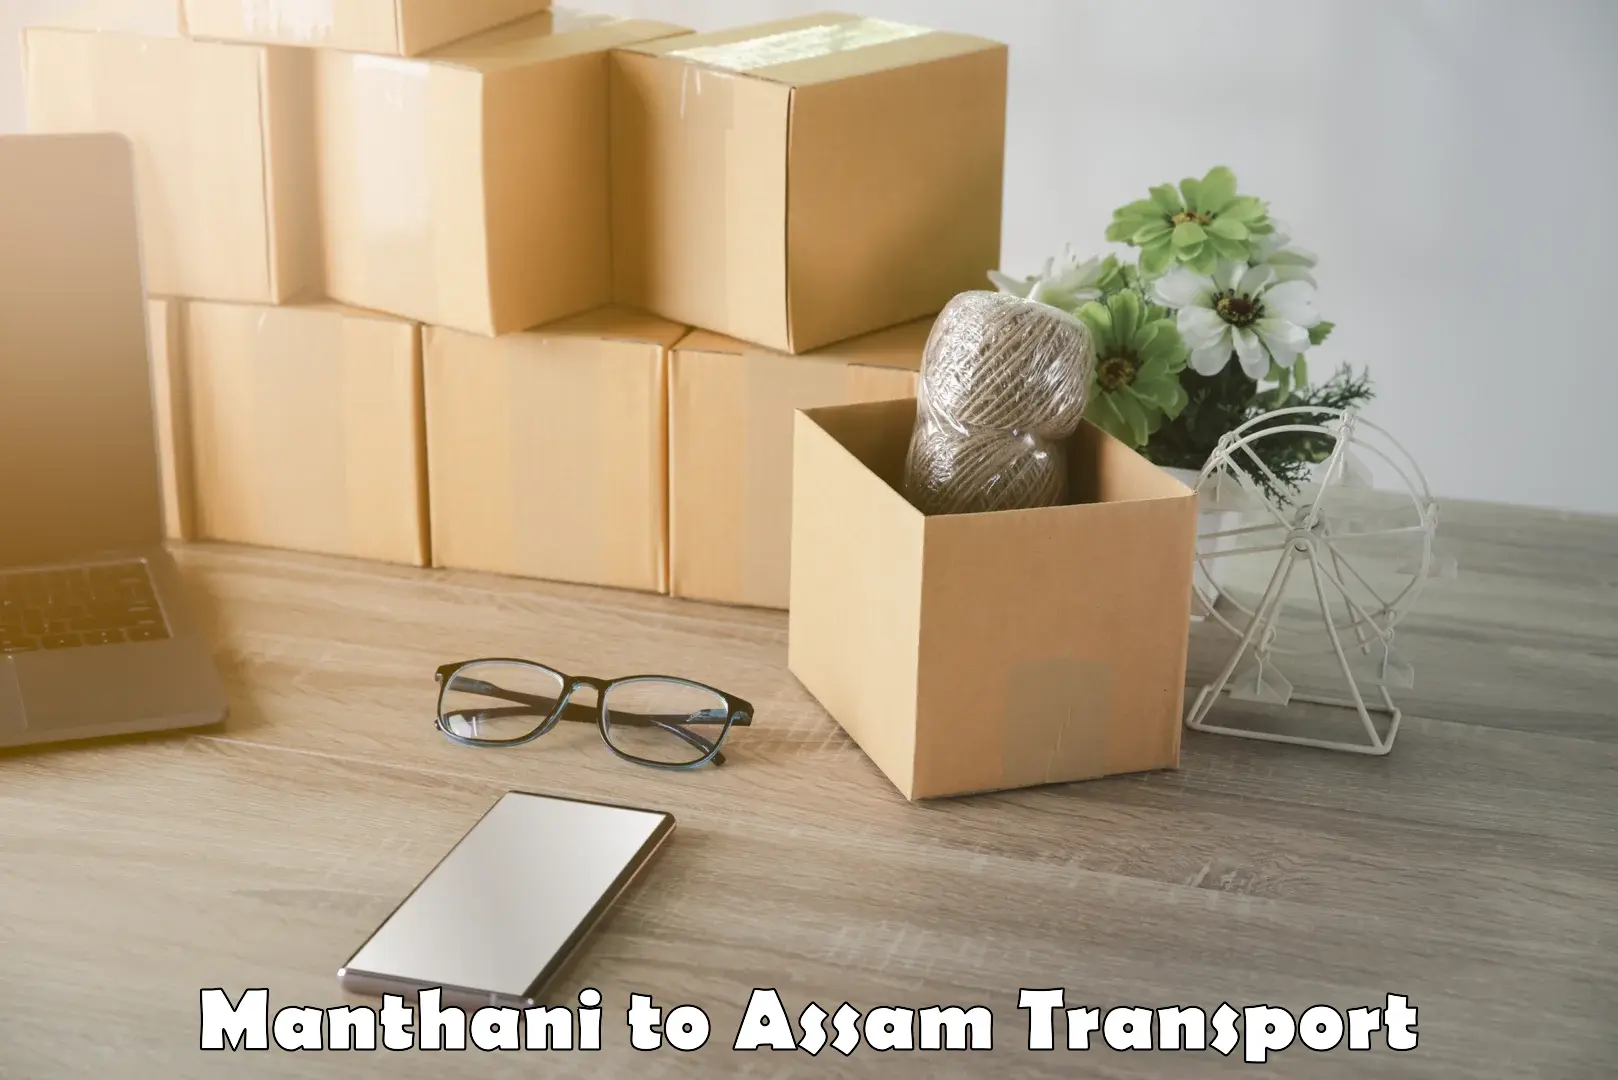 Lorry transport service Manthani to Lala Assam